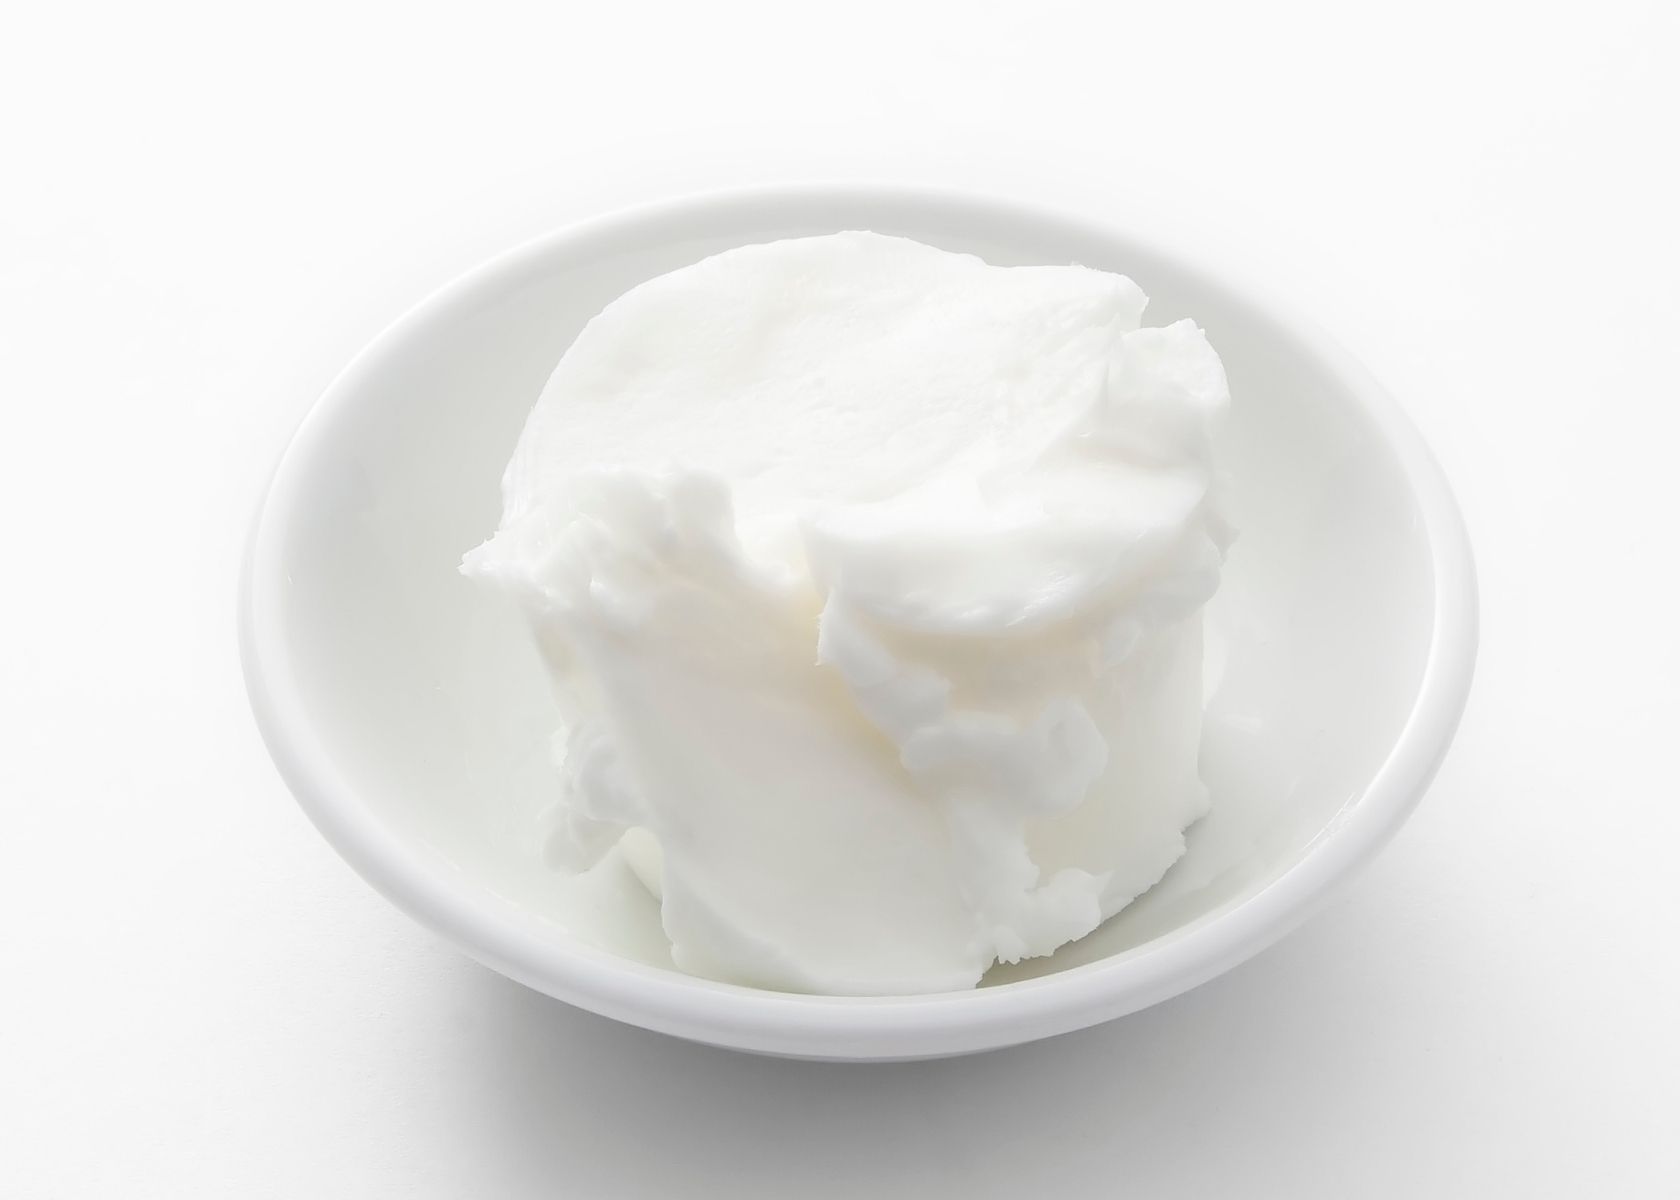 White vegetable shortening substitute for butter in white bowl on white surface.